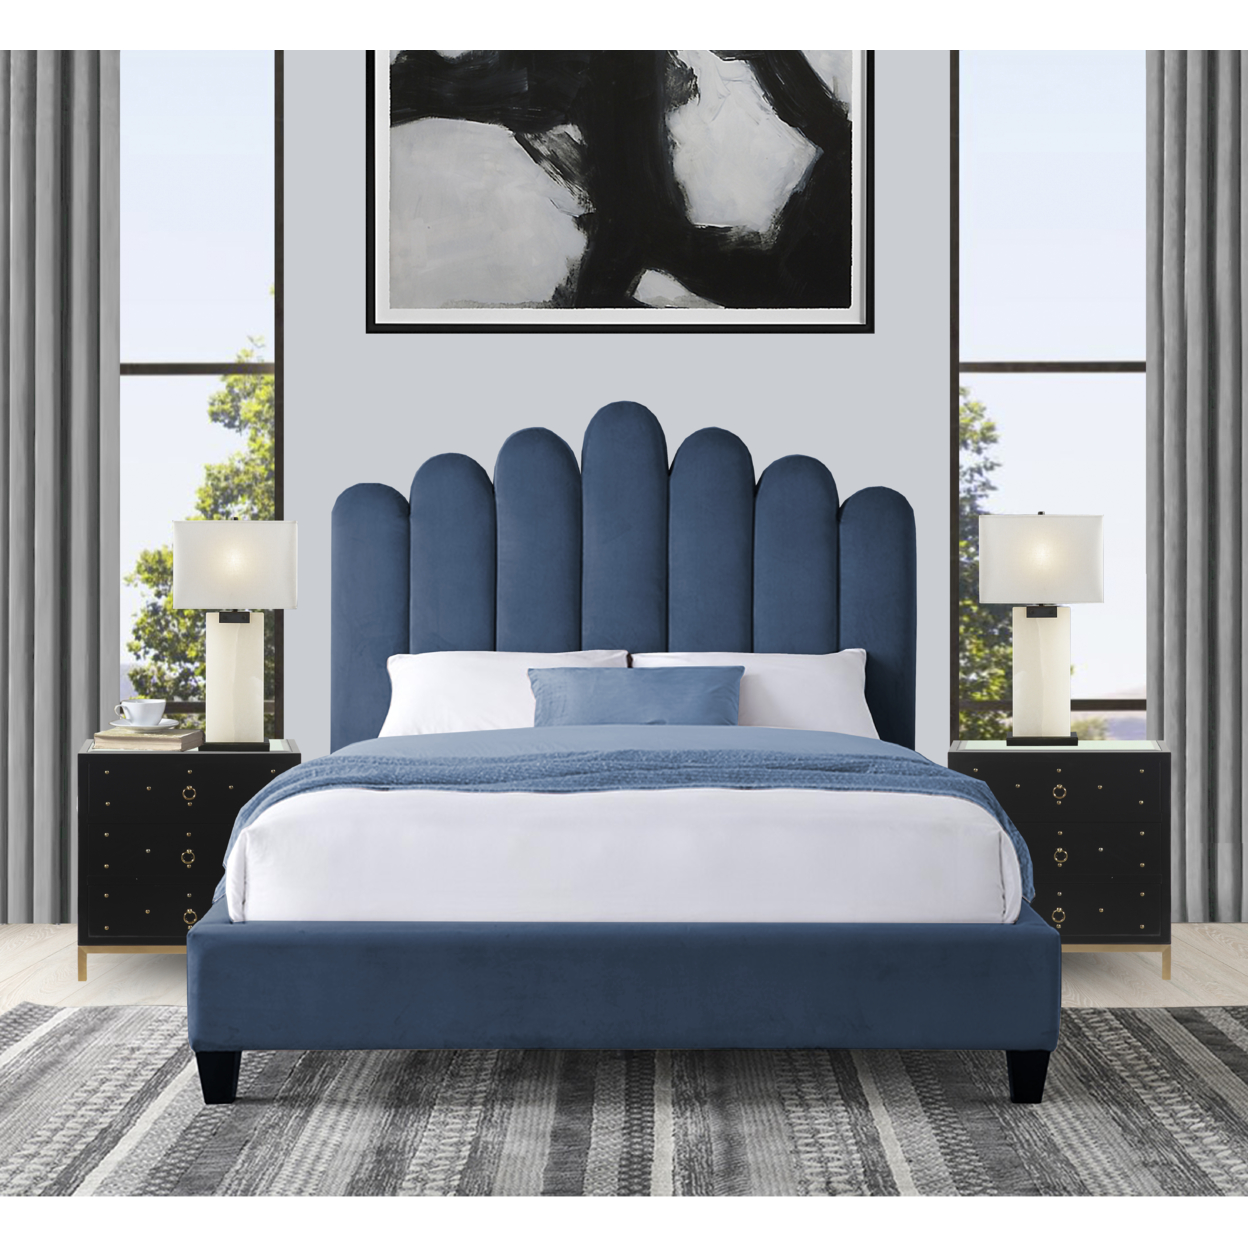 Iconic Home Brynn Platform Bed Frame With Headboard Velvet Upholstered Vertical Channel Quilted - Slate Blue, King